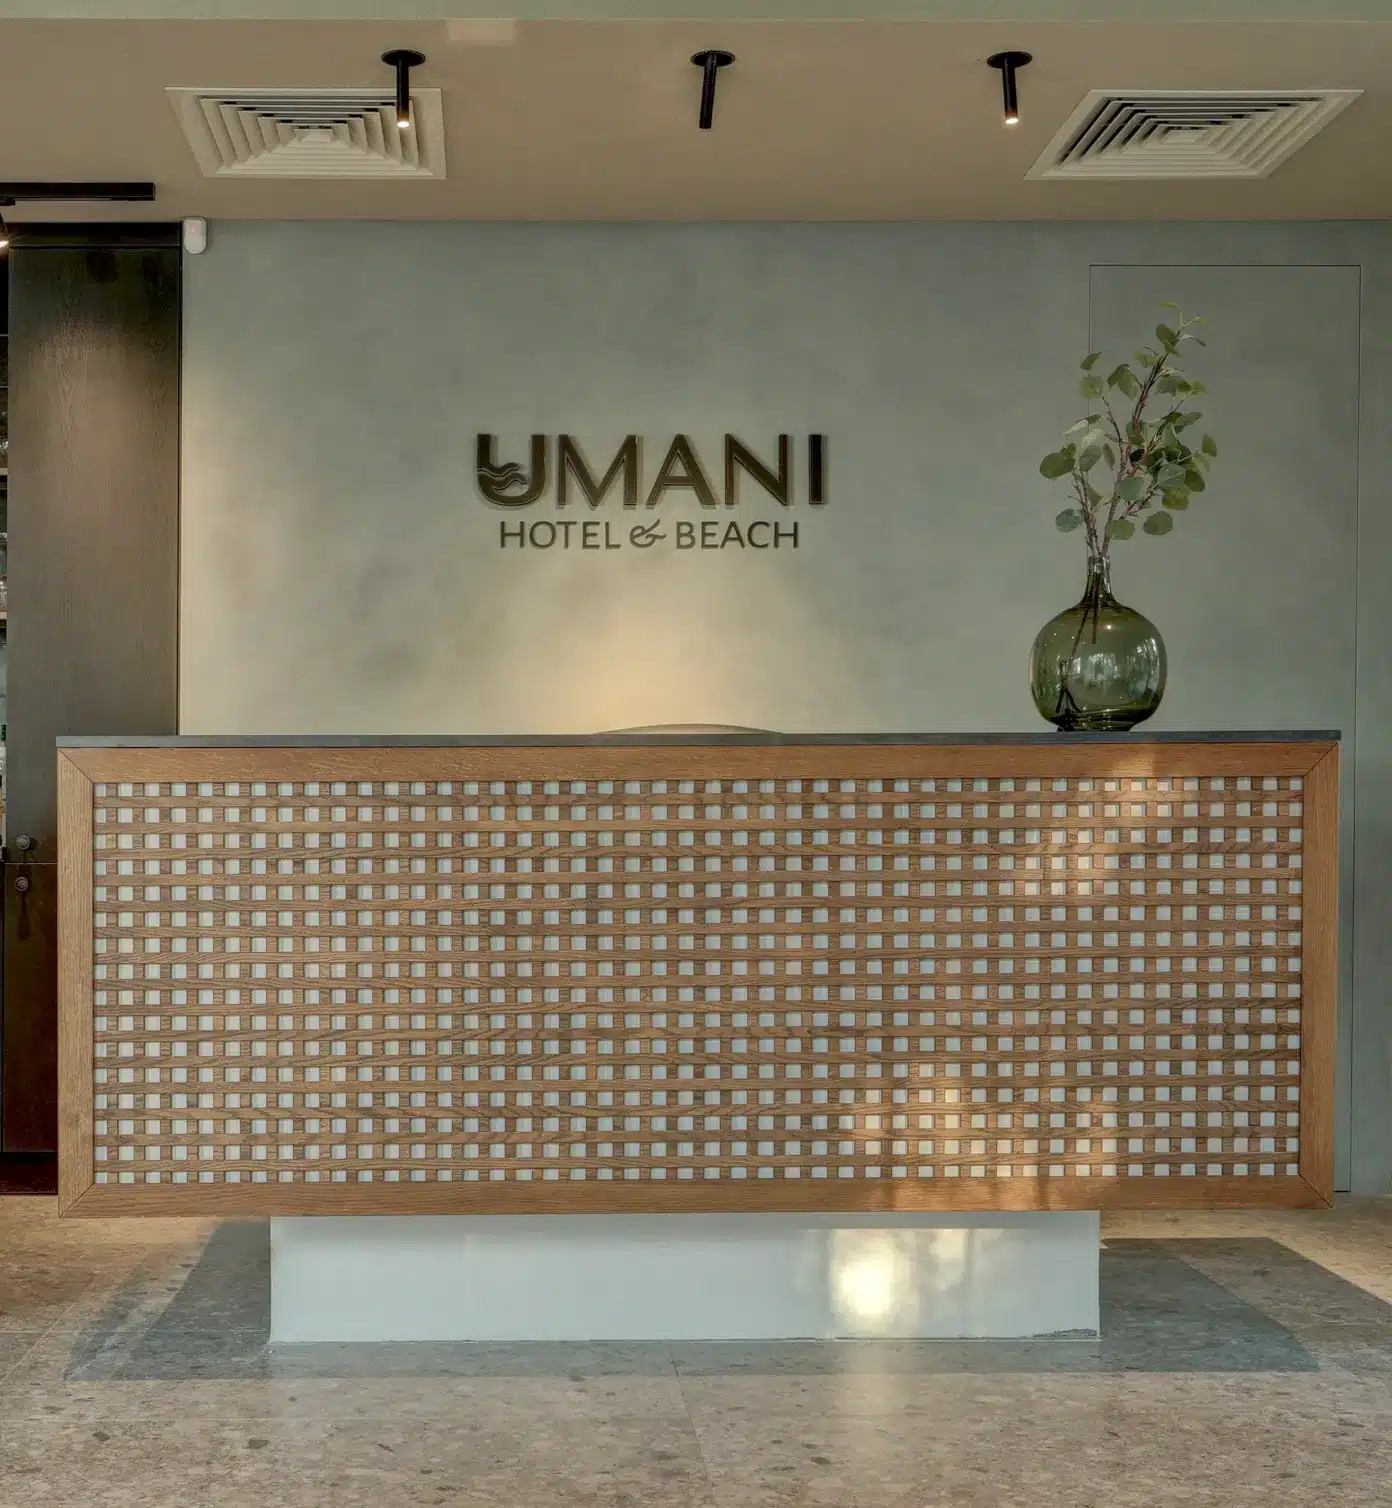 UMANI HOTEL & BEACH